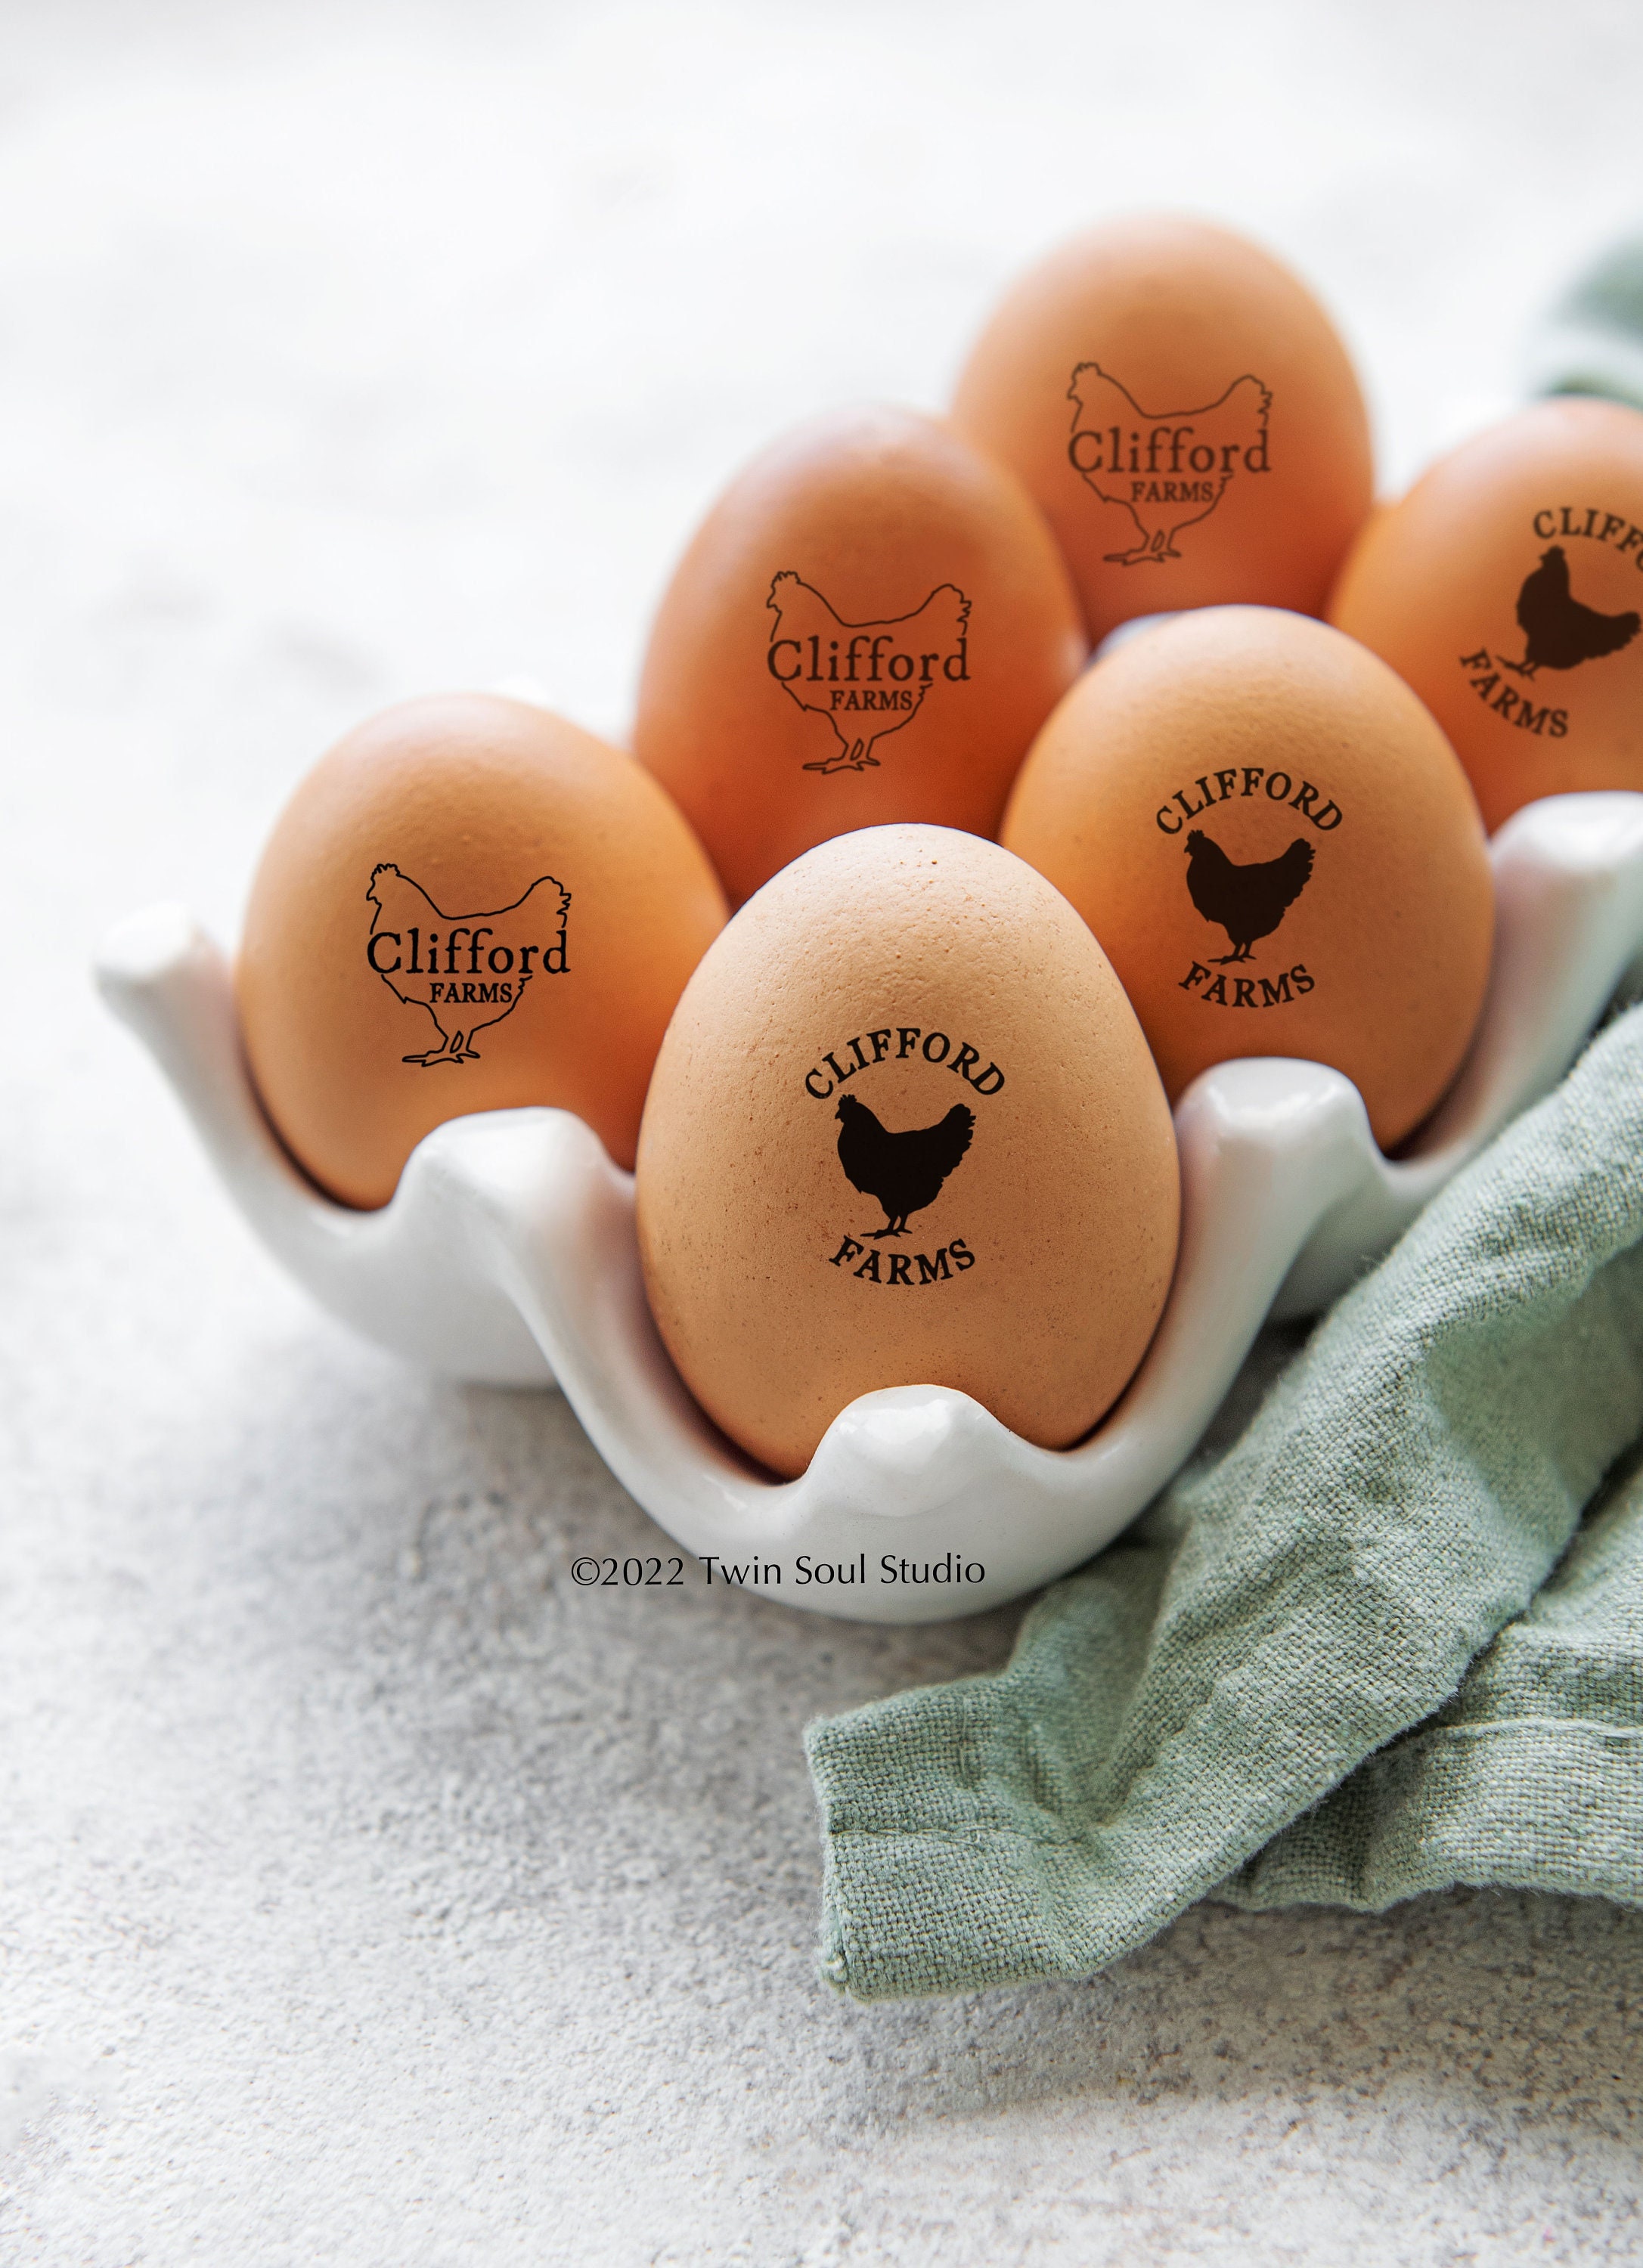 Egg Stamps for Cute Egg Stamps Egg Stamps for Fresh Eggs L6W4 I9N6